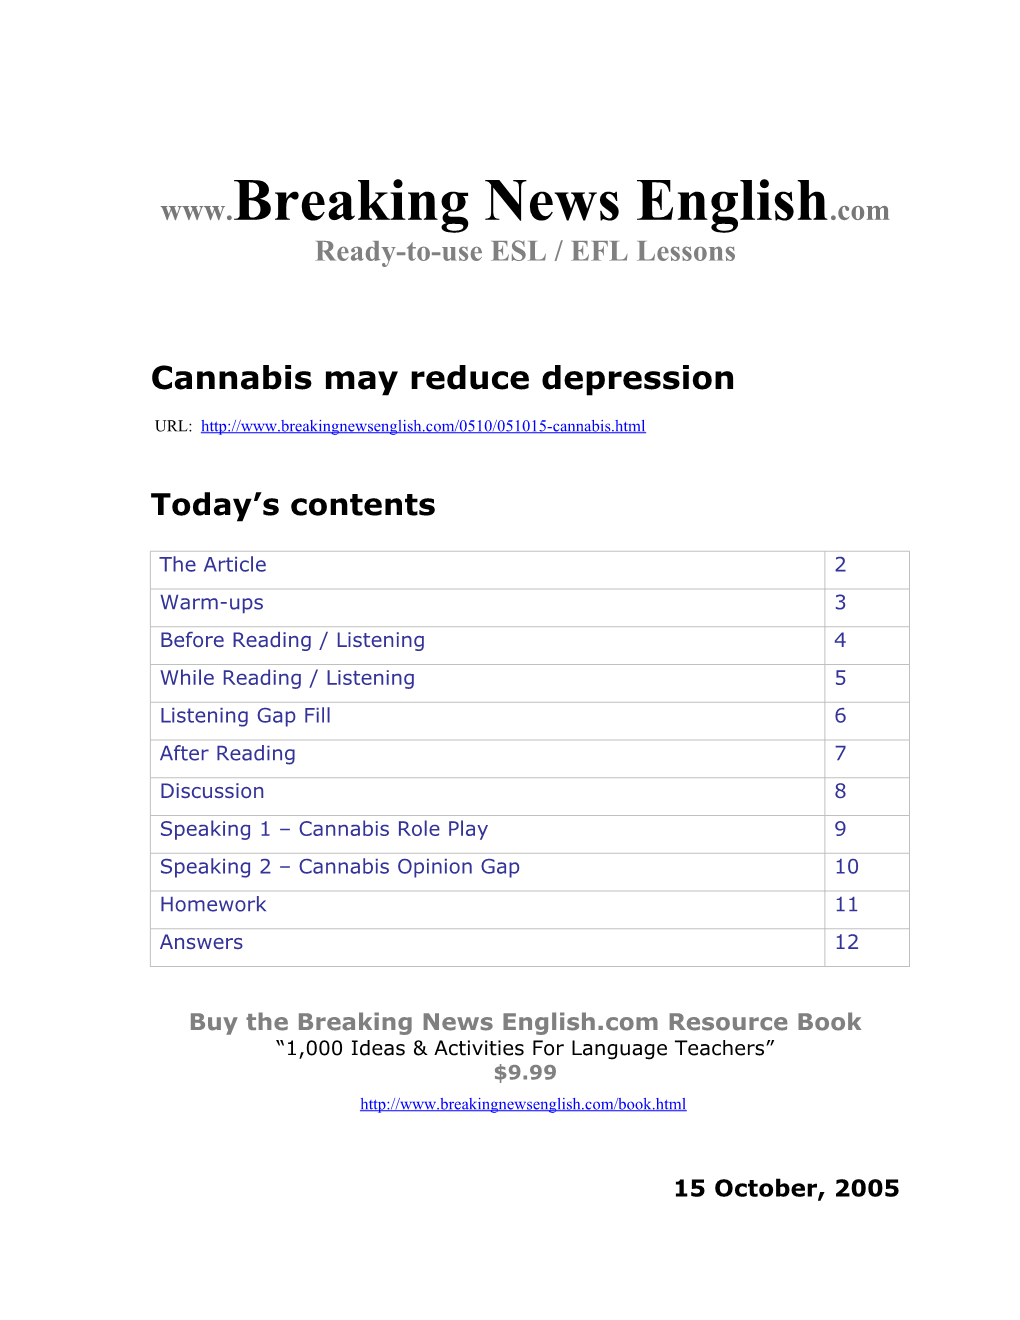 Cannabis May Reduce Depression